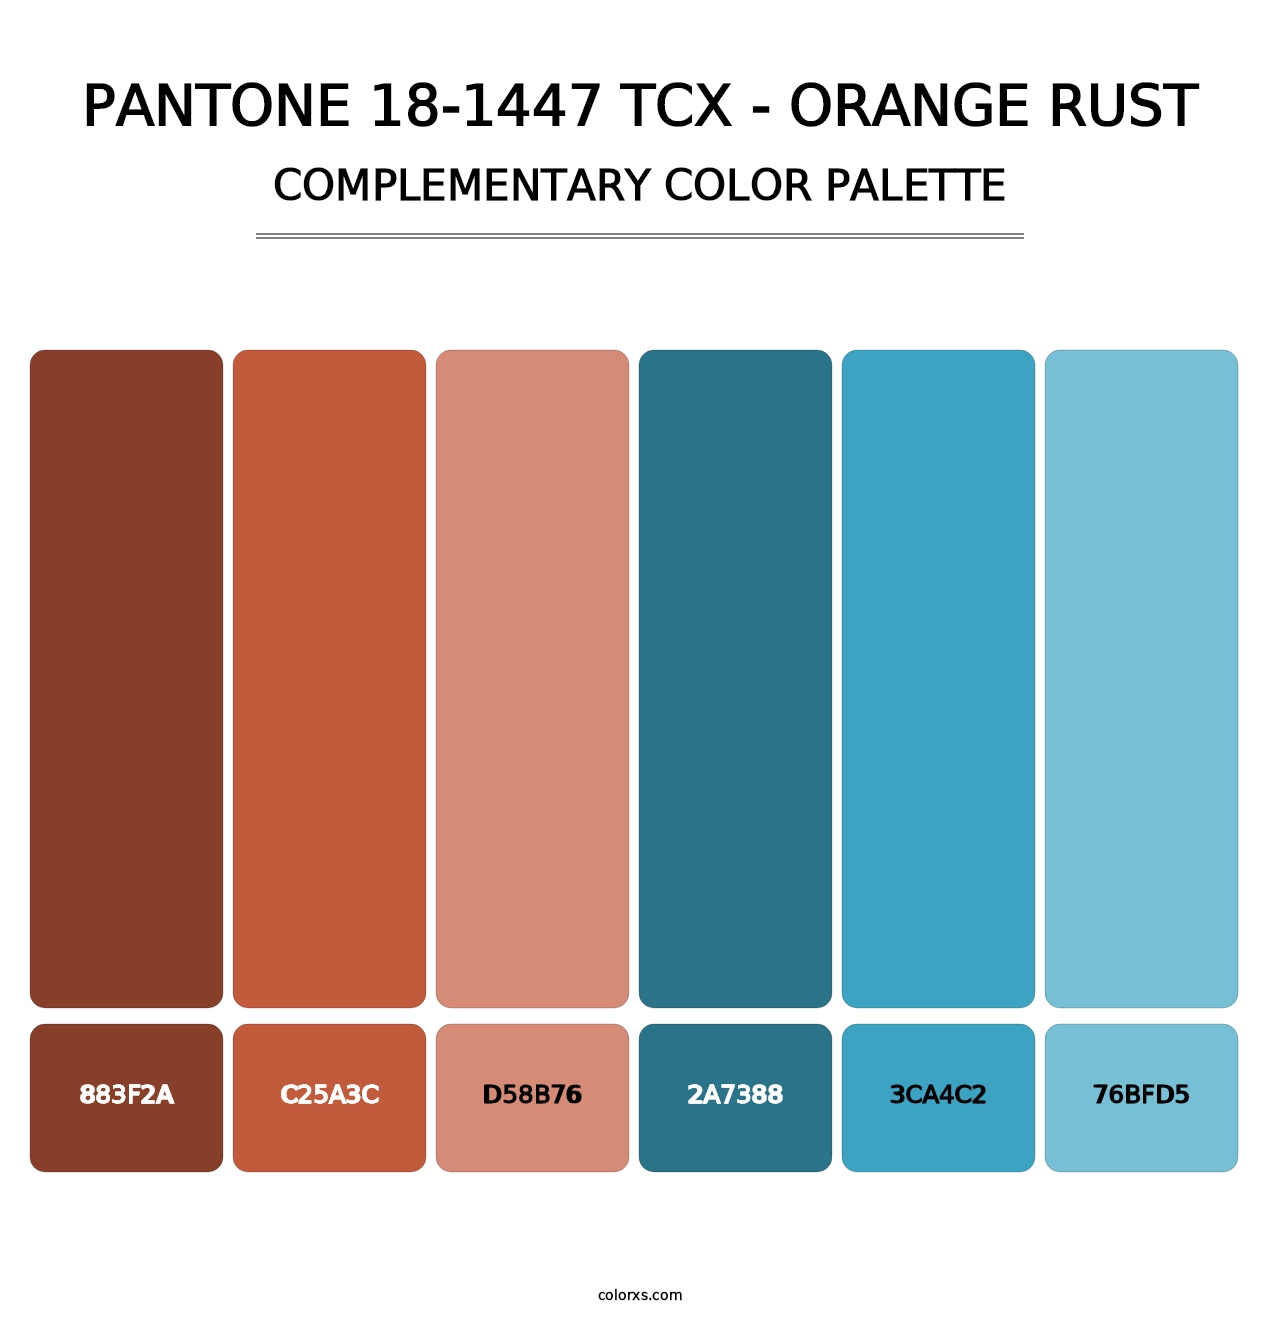 PANTONE 18-1447 TCX - Orange Rust - Complementary Color Palette